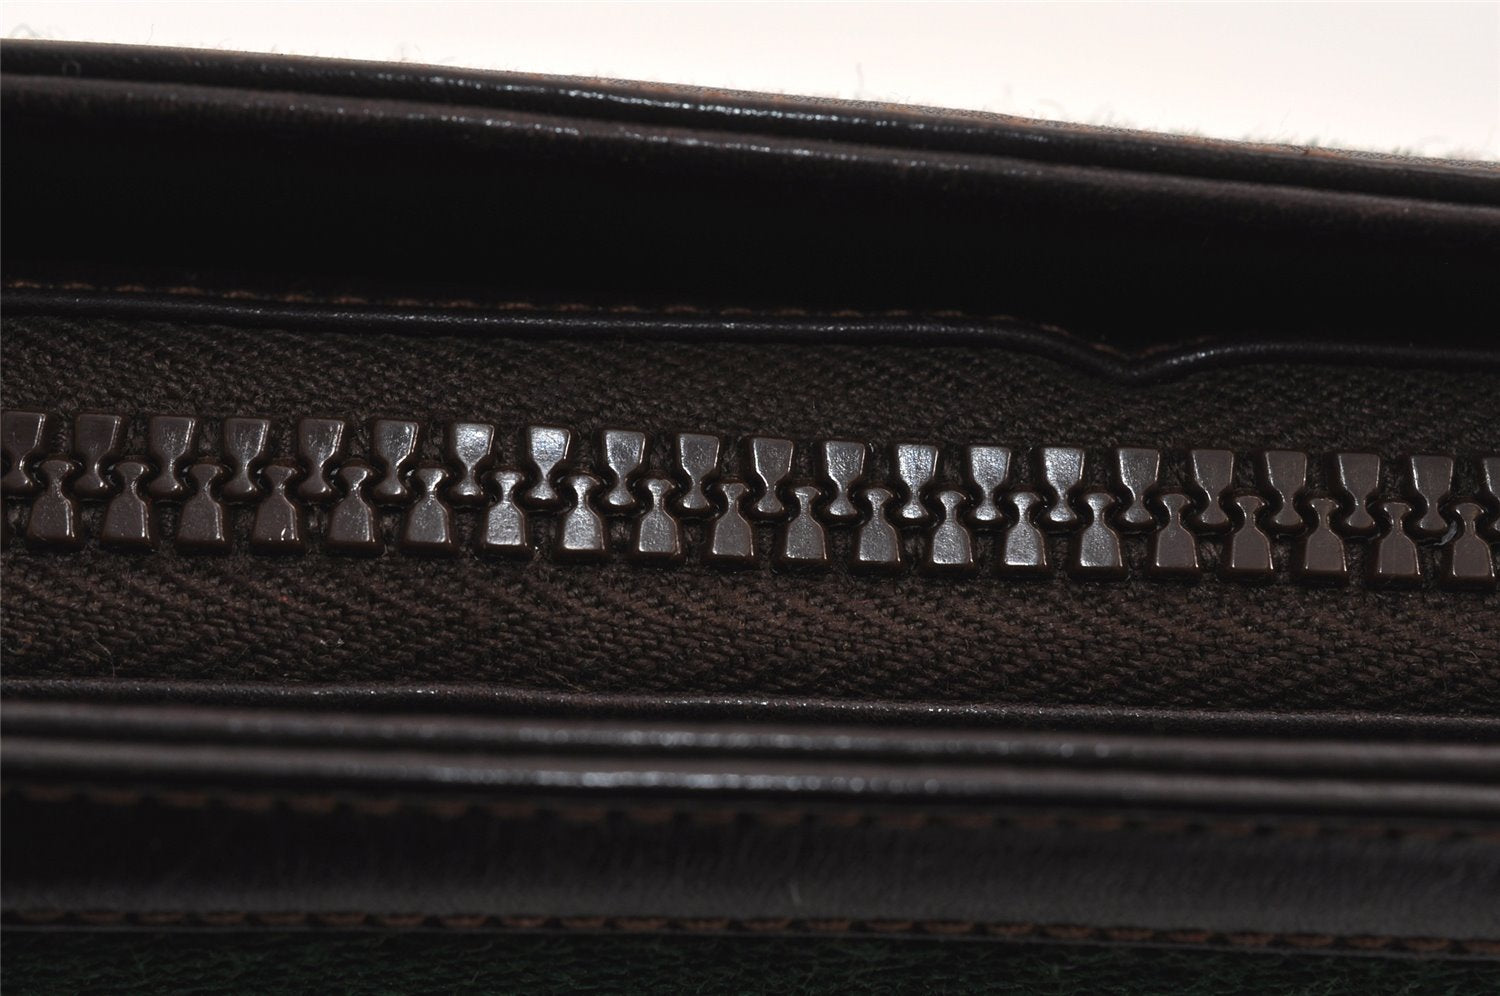 Authentic GUCCI Web Sherry Line Vintage Shoulder Bag Purse Leather Brown 9592J